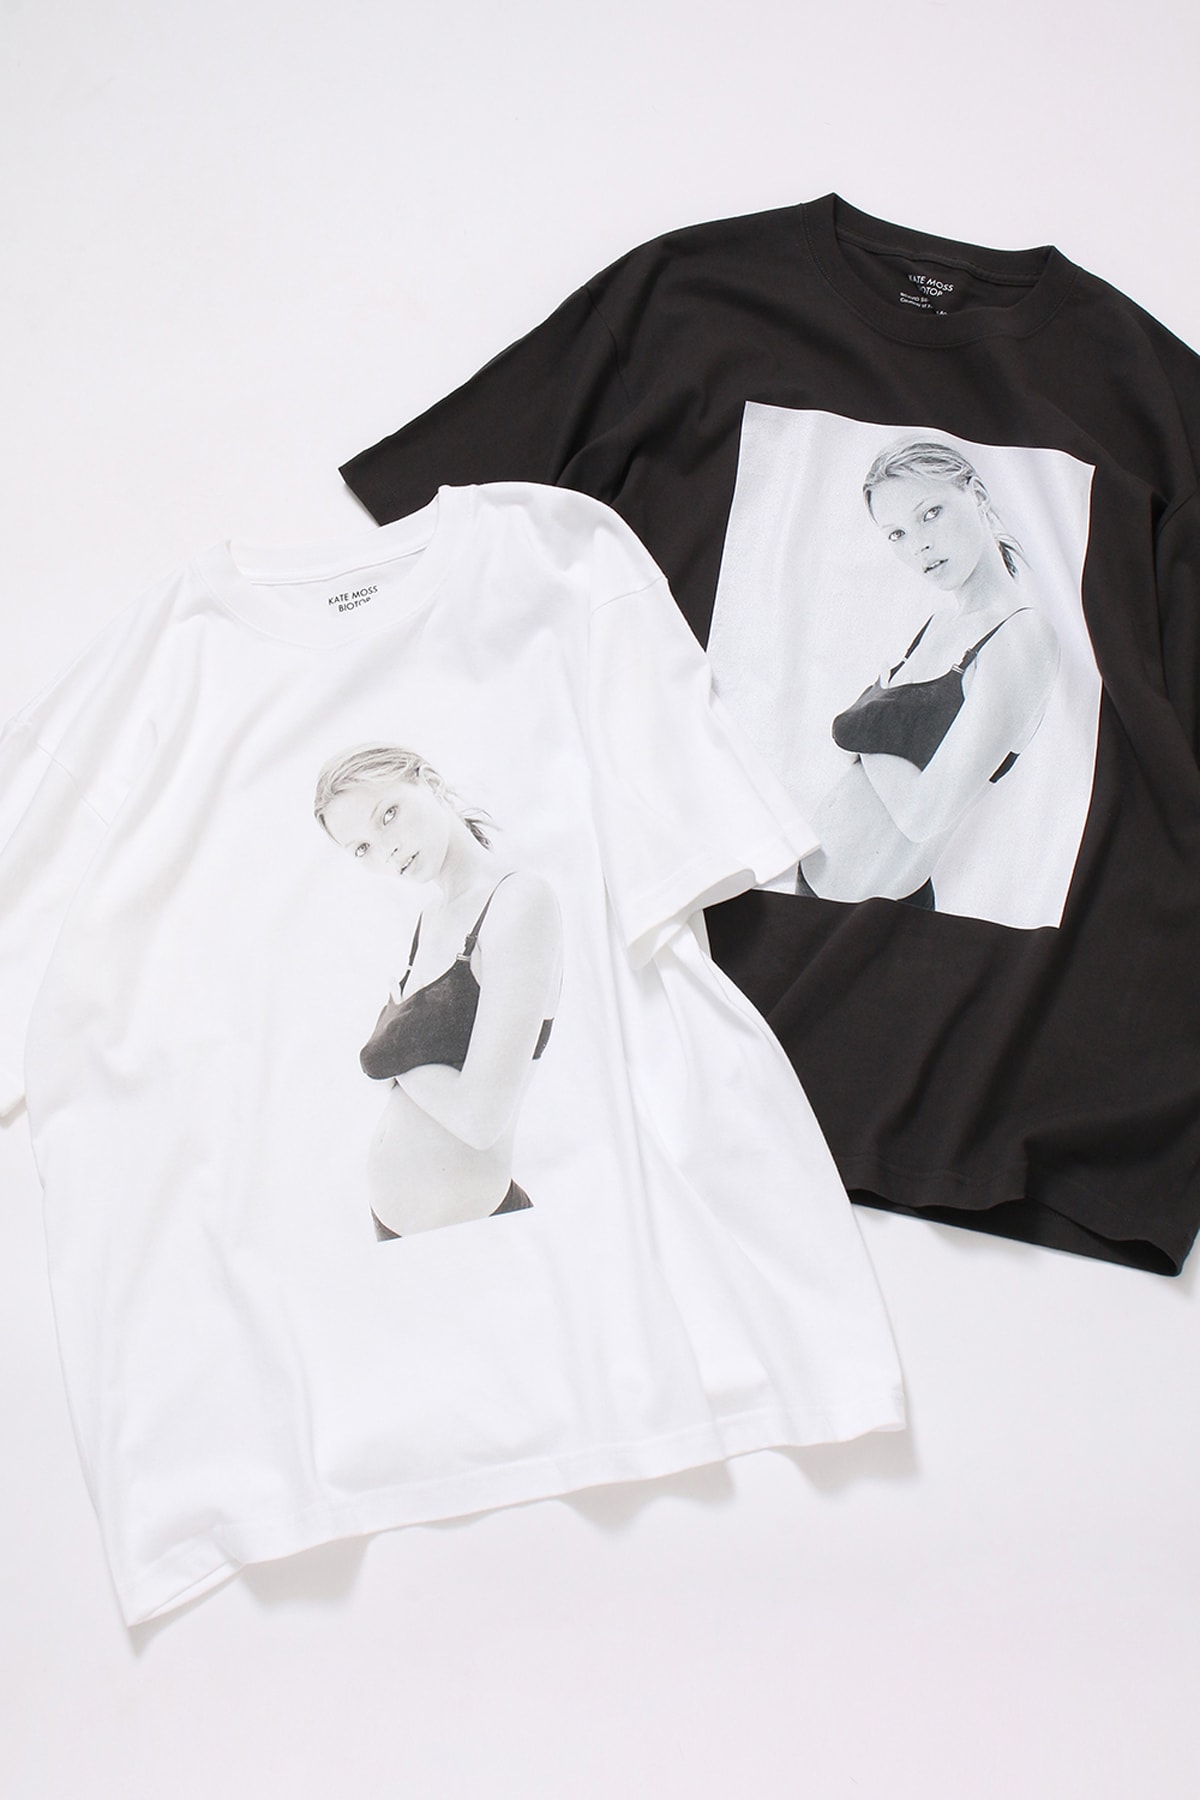 BIOTOP 推出 Kate Moss x David Sims 最新聯名 T-Shirt